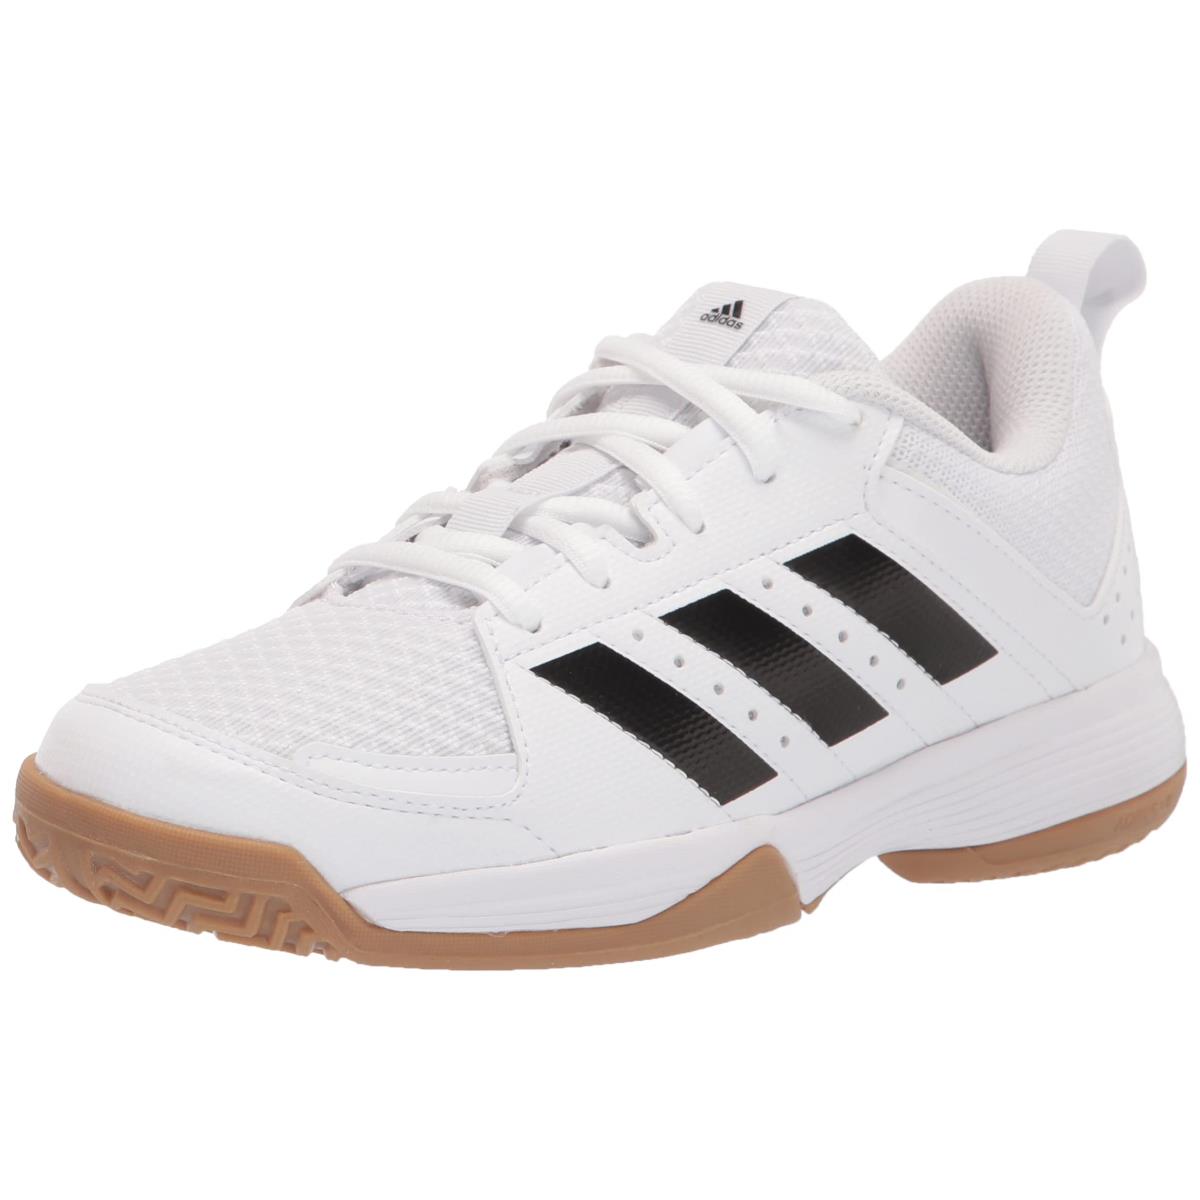 Adidas Unisex-child Ligra 7 Track and Field Shoes White/Black/White